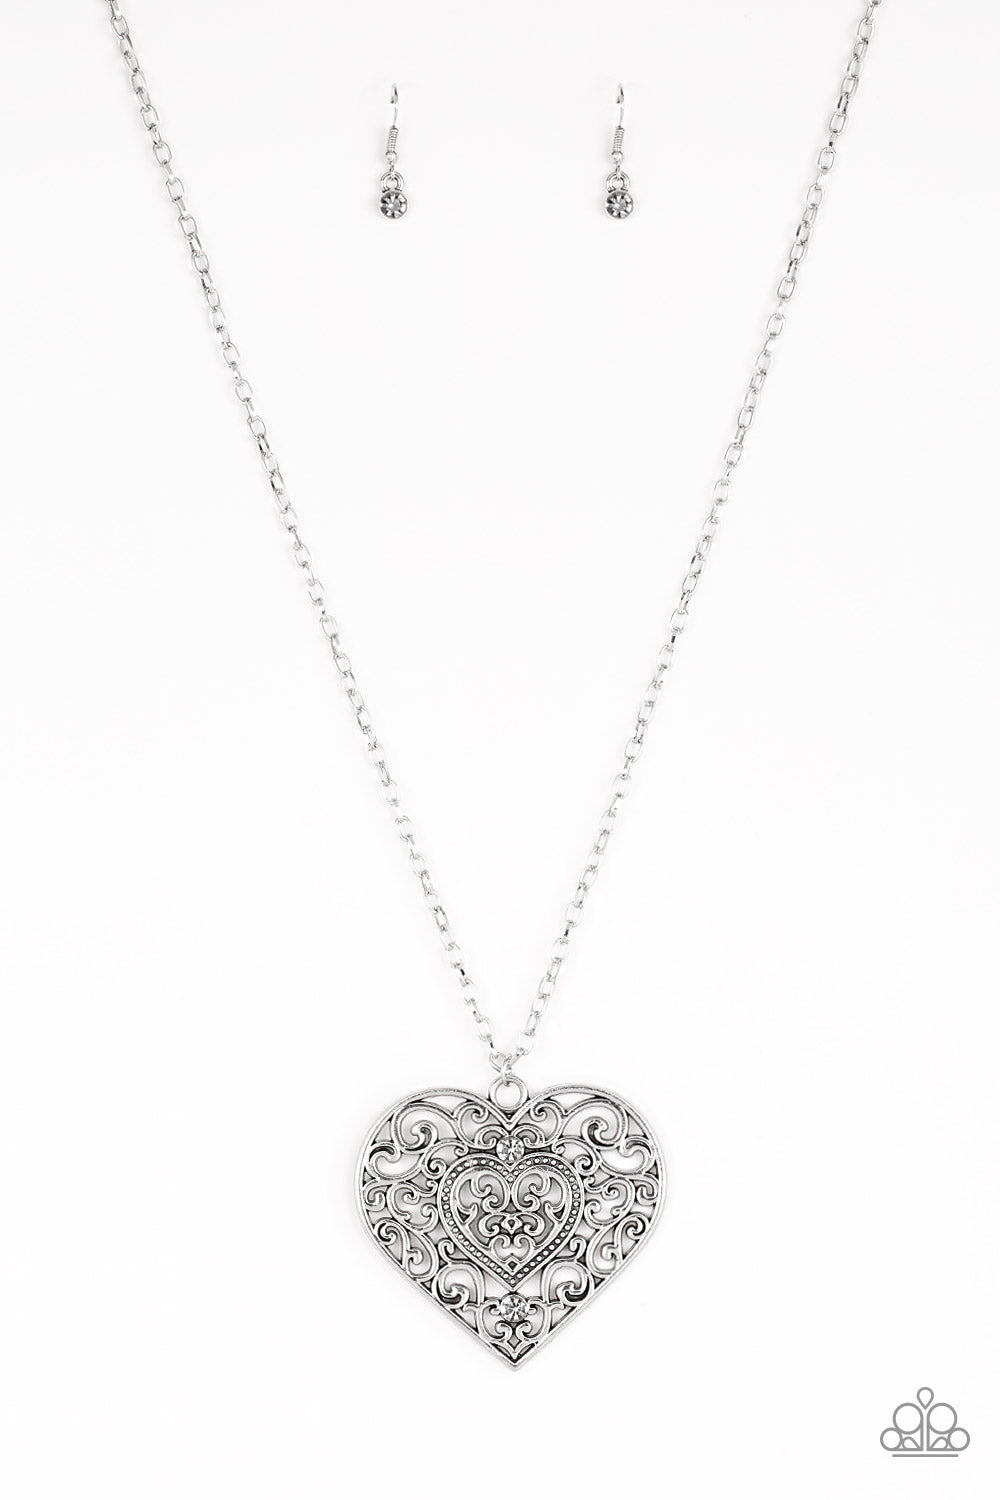 Classic Casanova - Silver Necklace Set - Princess Glam Shop